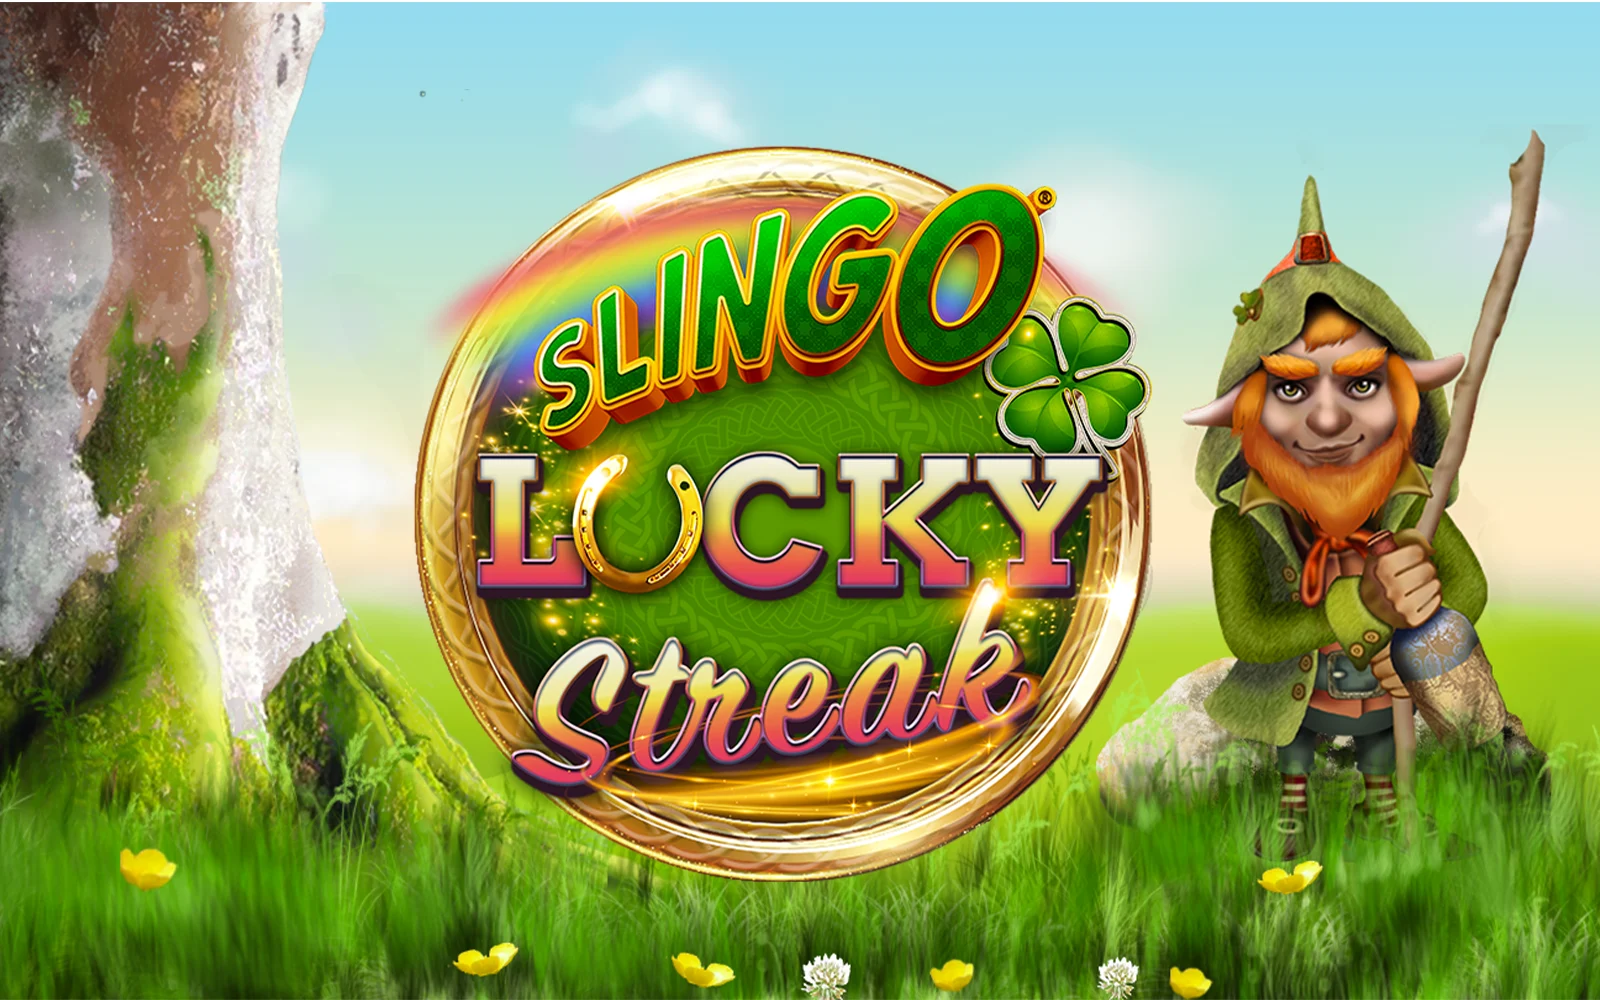 Play Slingo Lucky Streak on Starcasino.be online casino